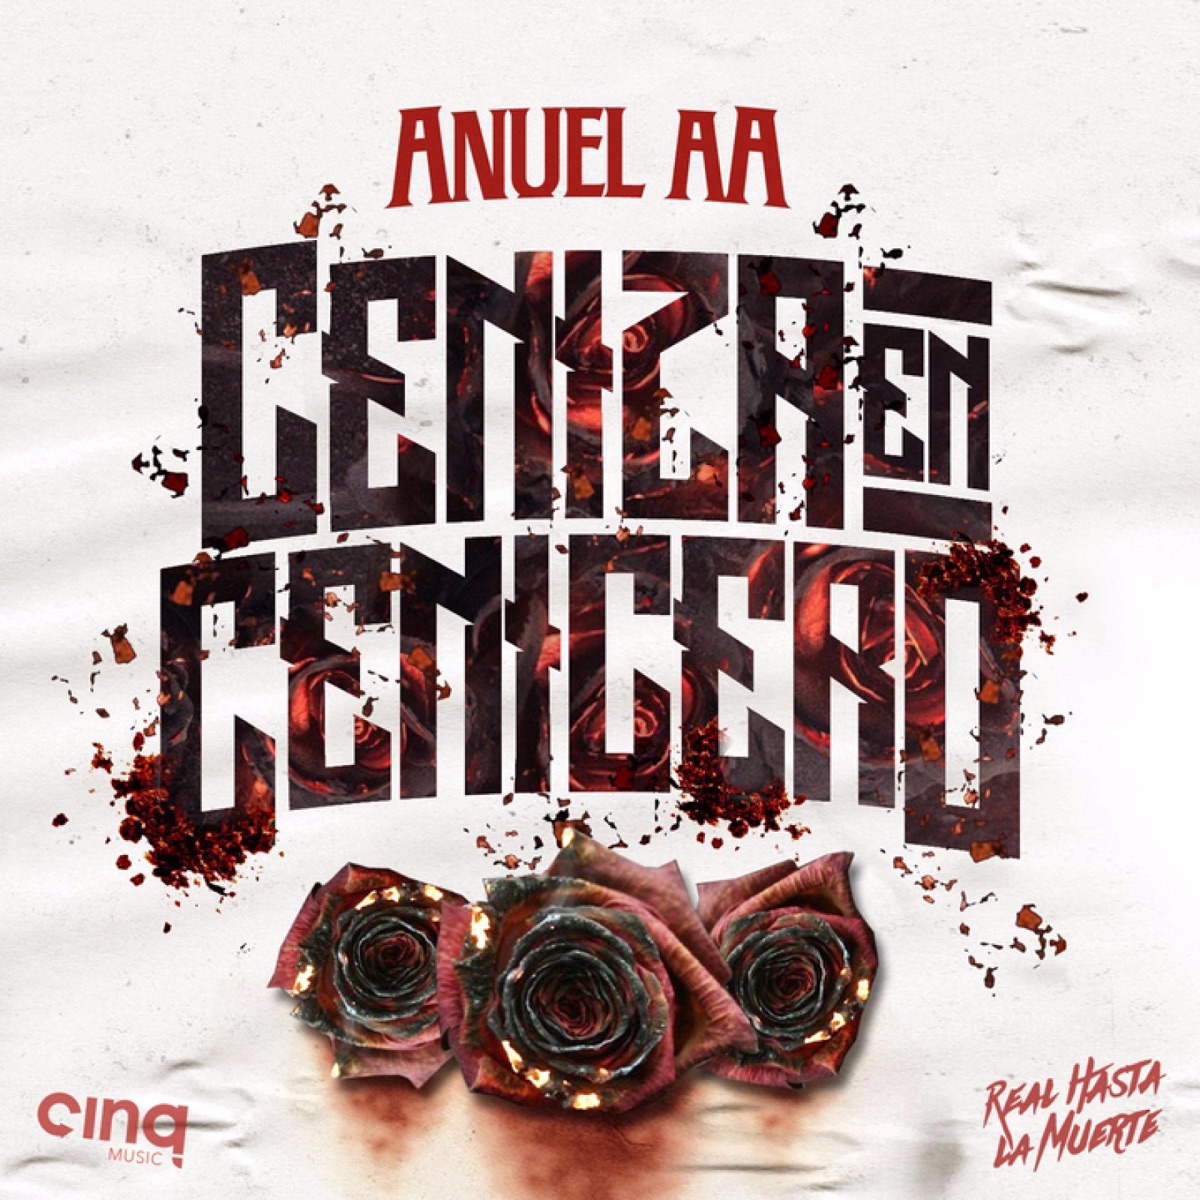 Ceniza En Cenicero - Single - Album by Anuel AA - Apple Music